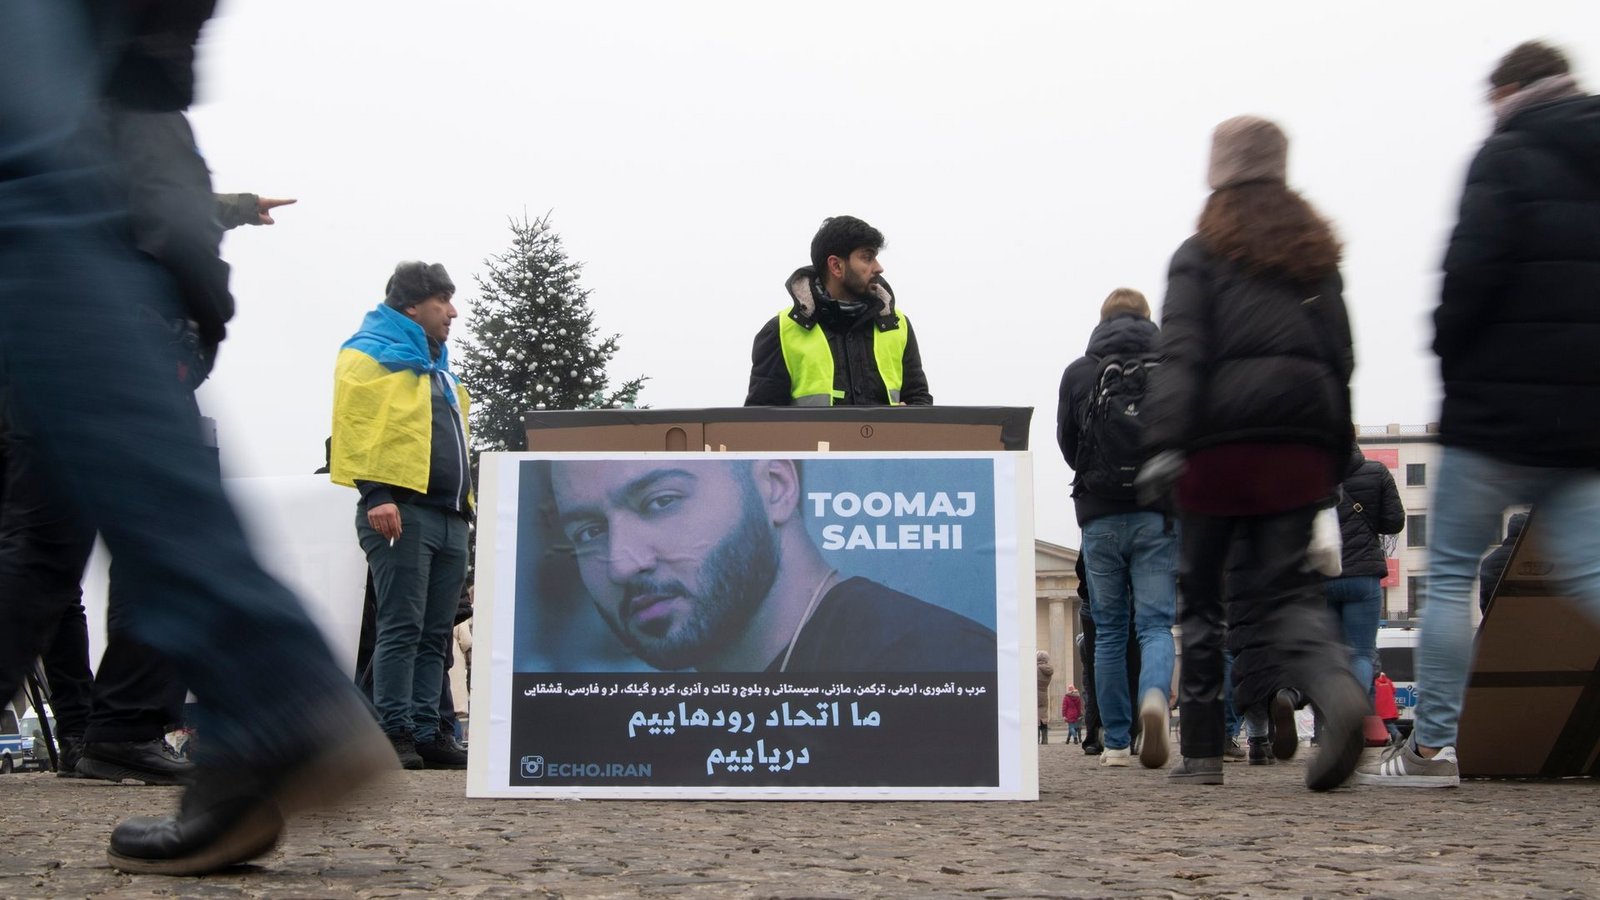 Solidaritätsaktion für den iranischen Rapper Tumadsch Salehi in Berlin (Archivbild).<span class='image-autor'>Foto: Paul Zinken/dpa</span>